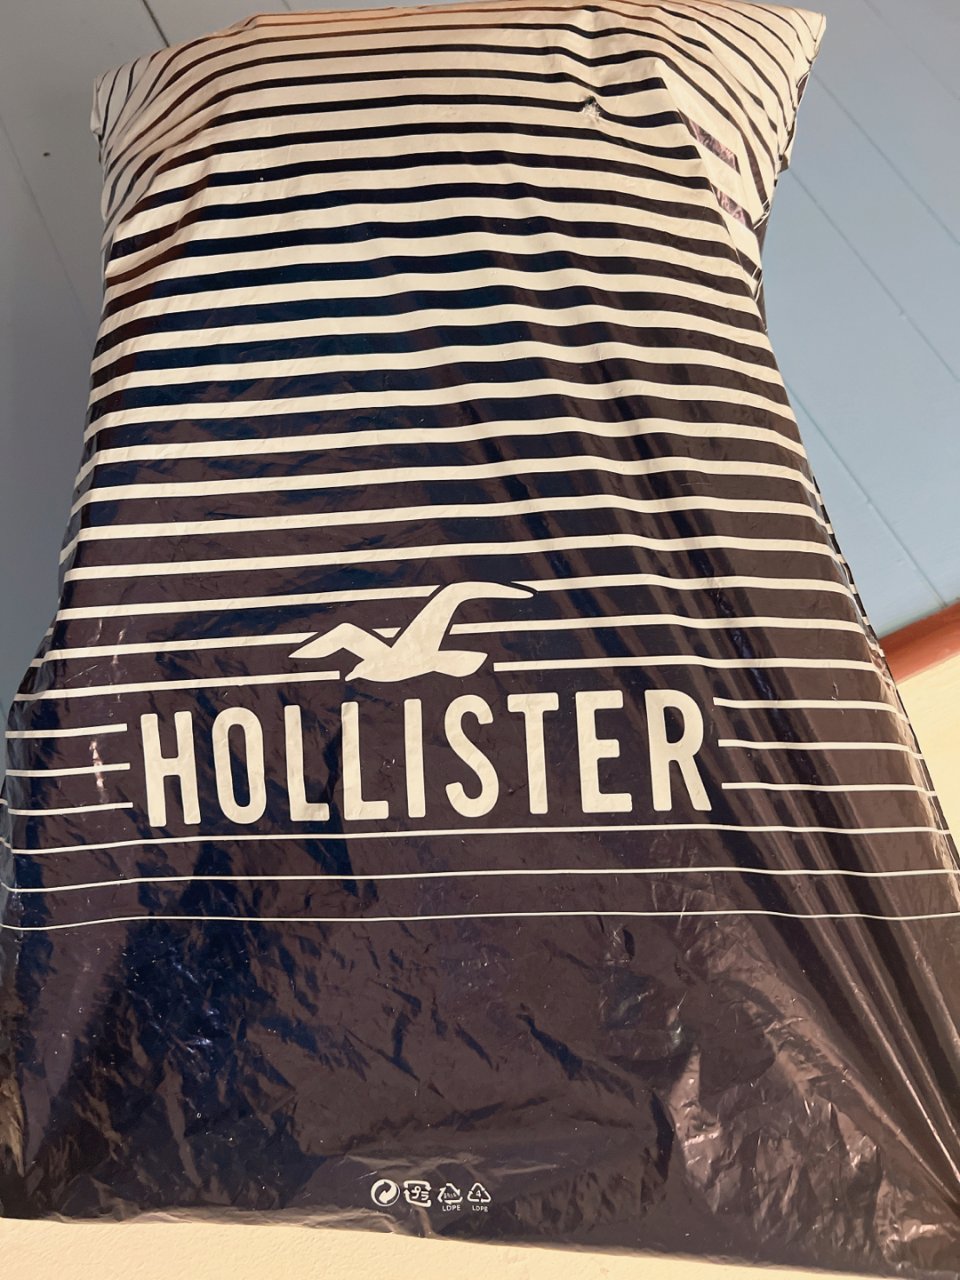 Hollister 霍利斯特